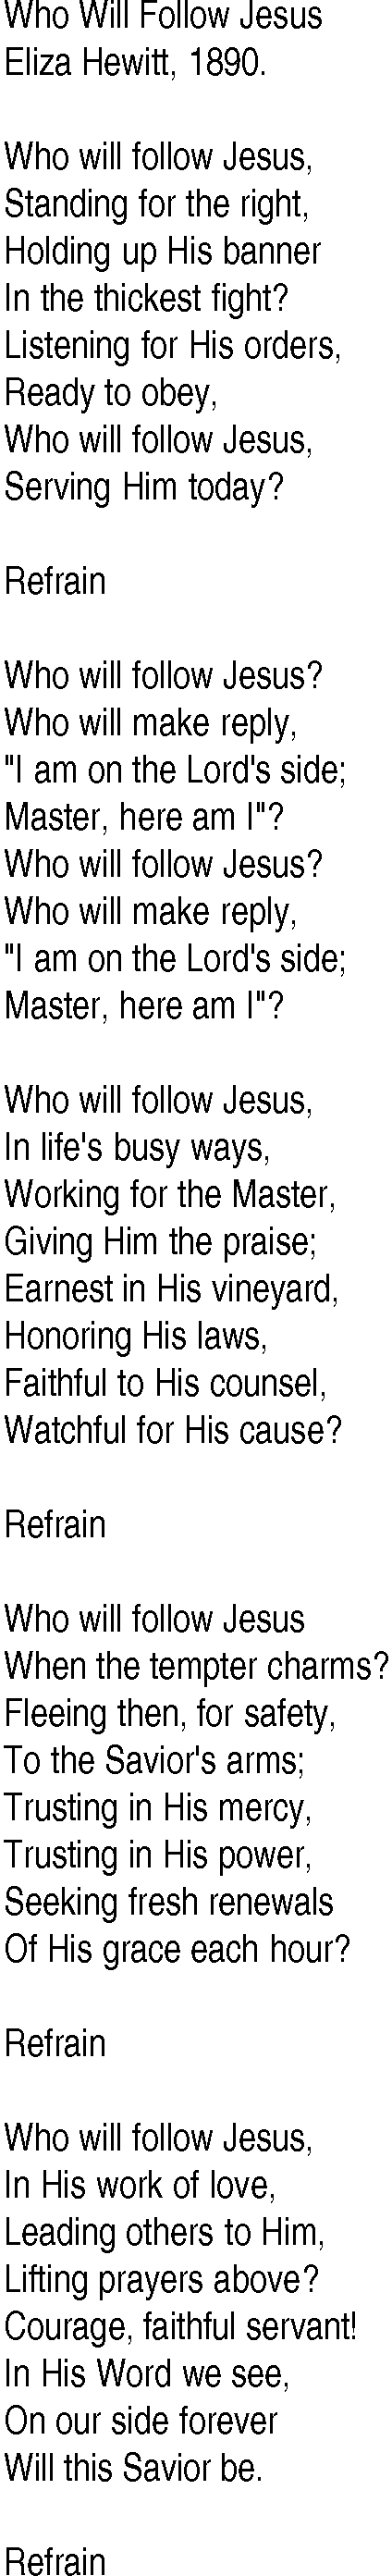 Hymn and Gospel Song: Who Will Follow Jesus by Eliza Hewitt lyrics